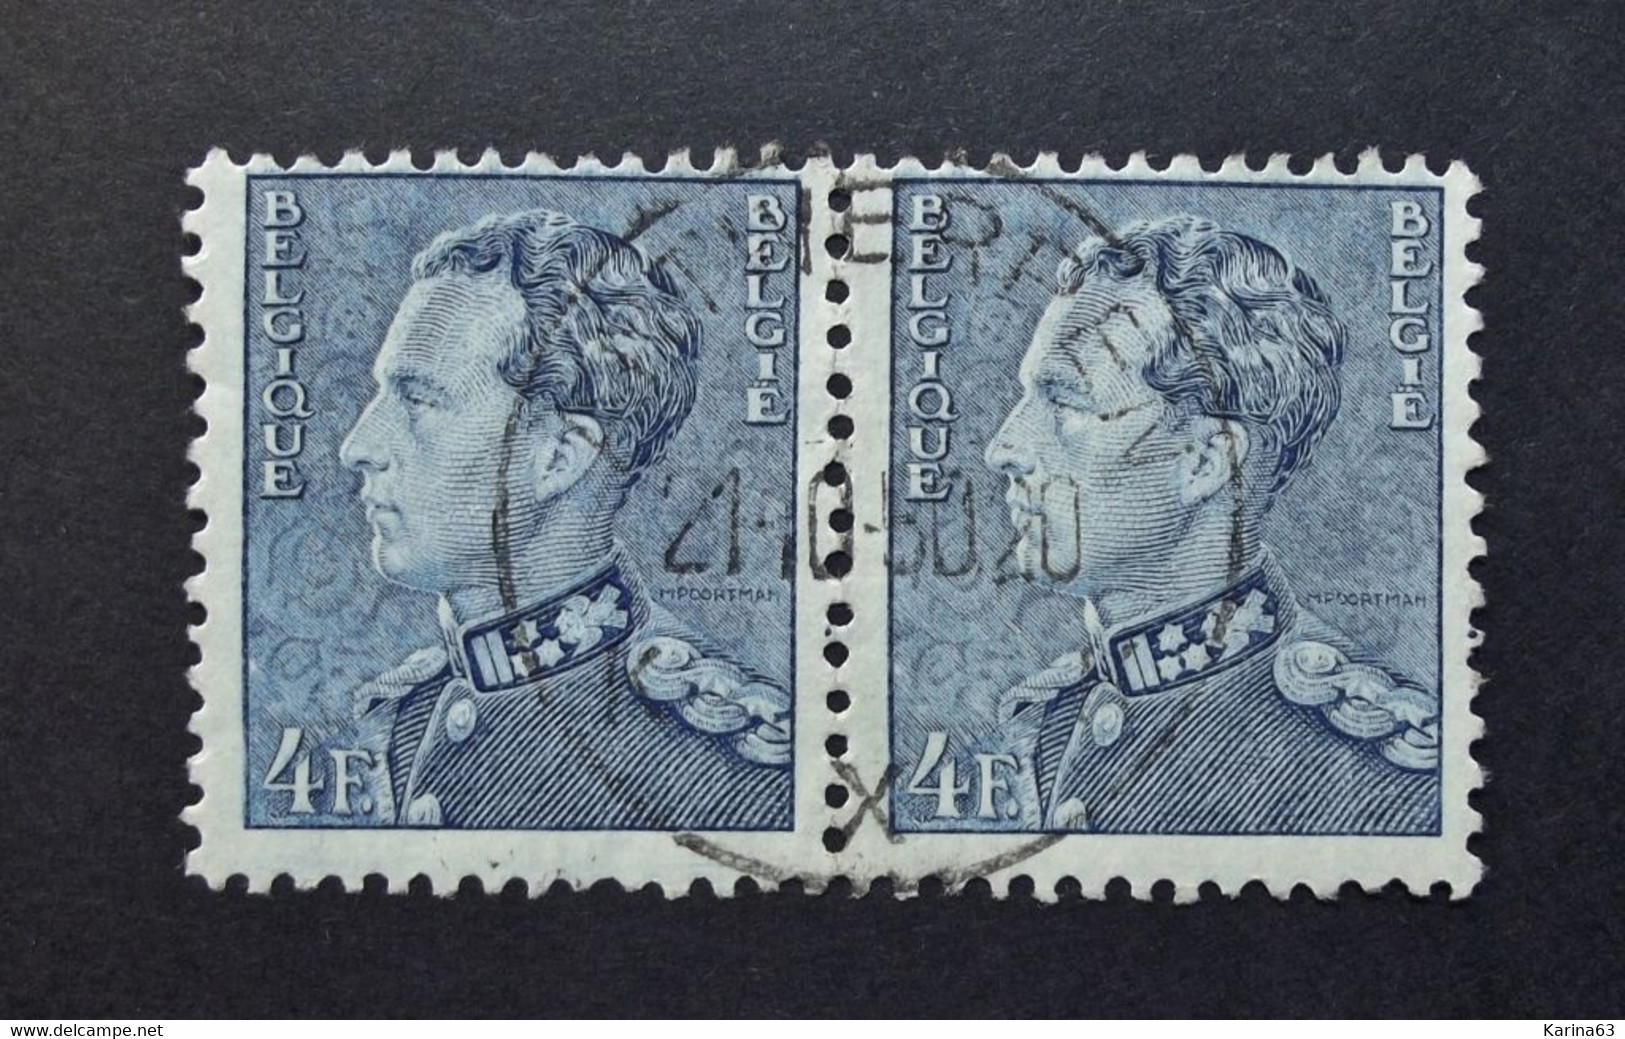 Belgie Belgique - 1950 - OPB/COB  N° 833  (2 Value) - Koning Leopold III  Poortman Obl. -  Antwerpen X . - Used Stamps